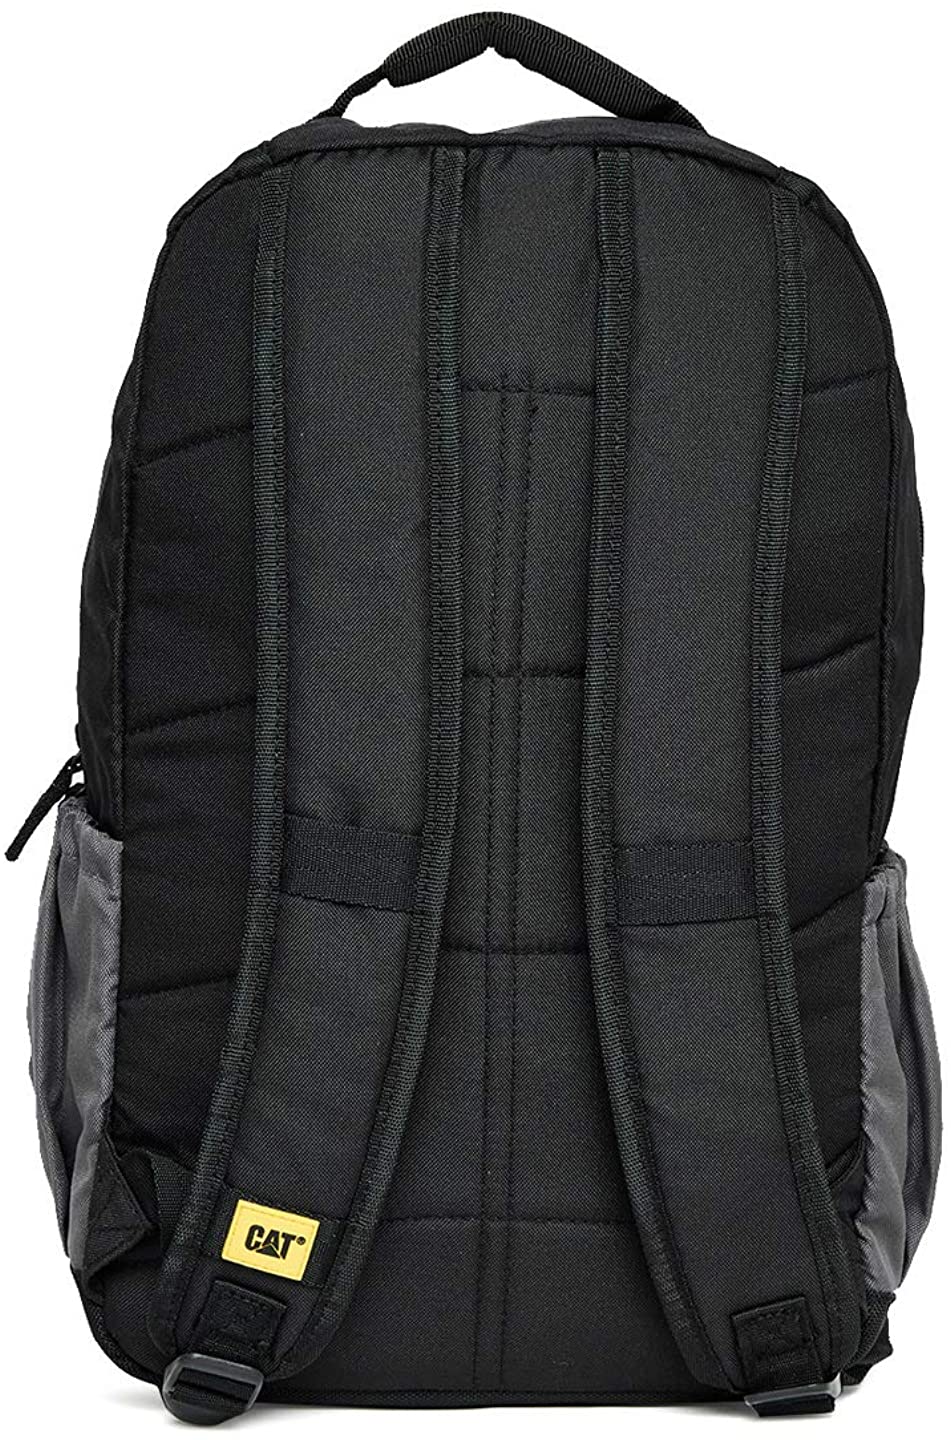 83441-172 Cat Bruce Black/Anthracite Millennial Backpack